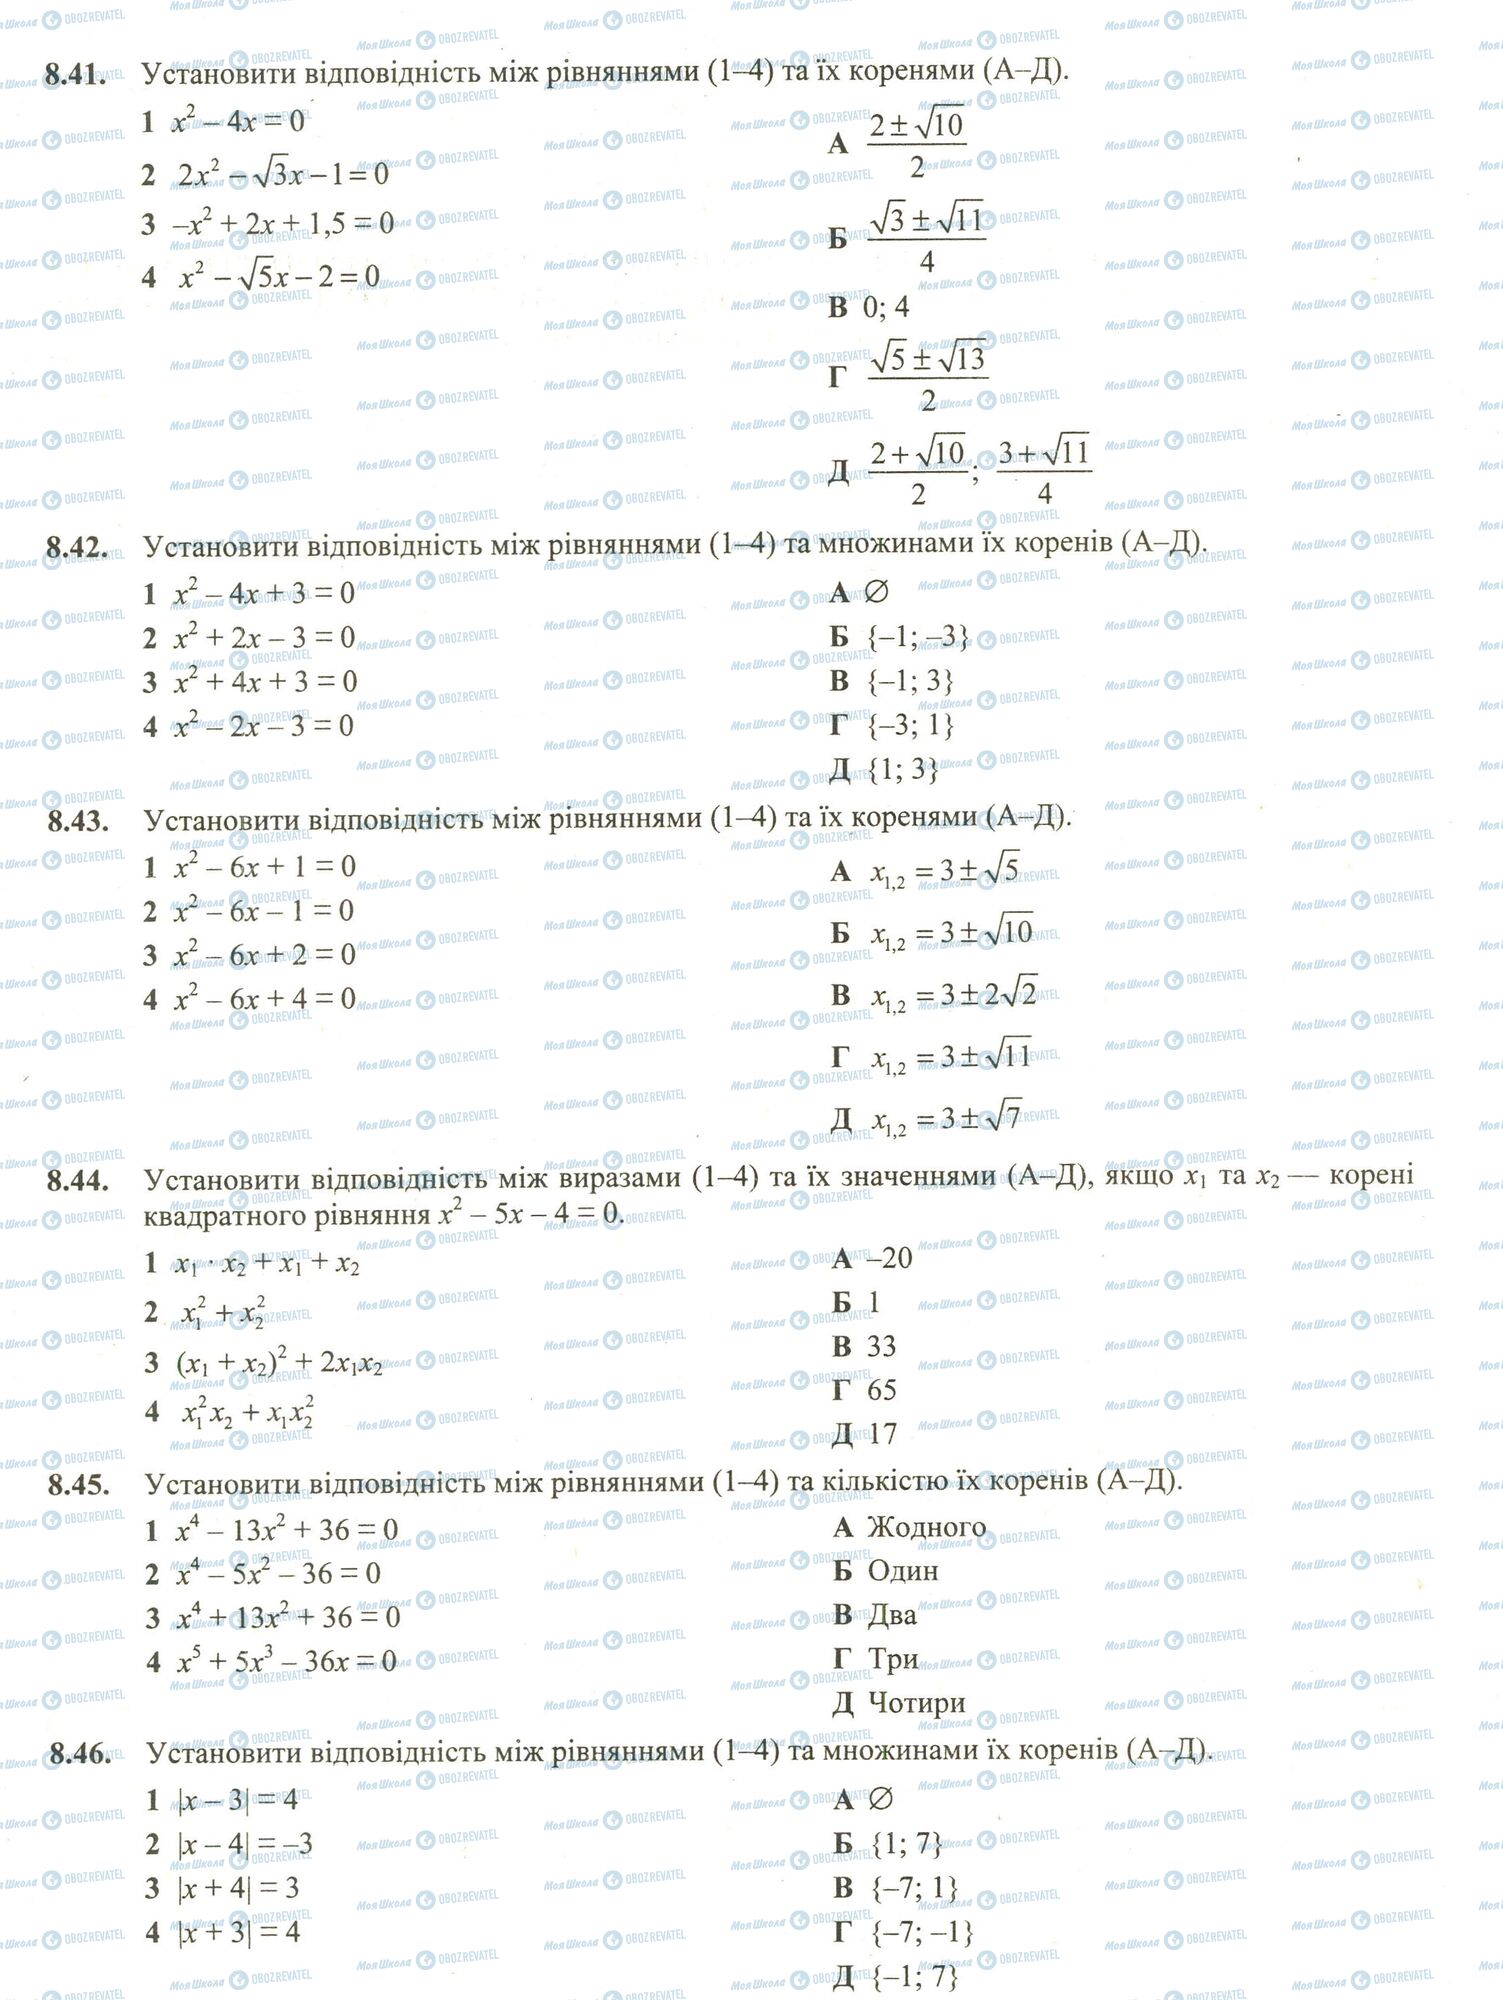 ЗНО Математика 11 класс страница 41-46